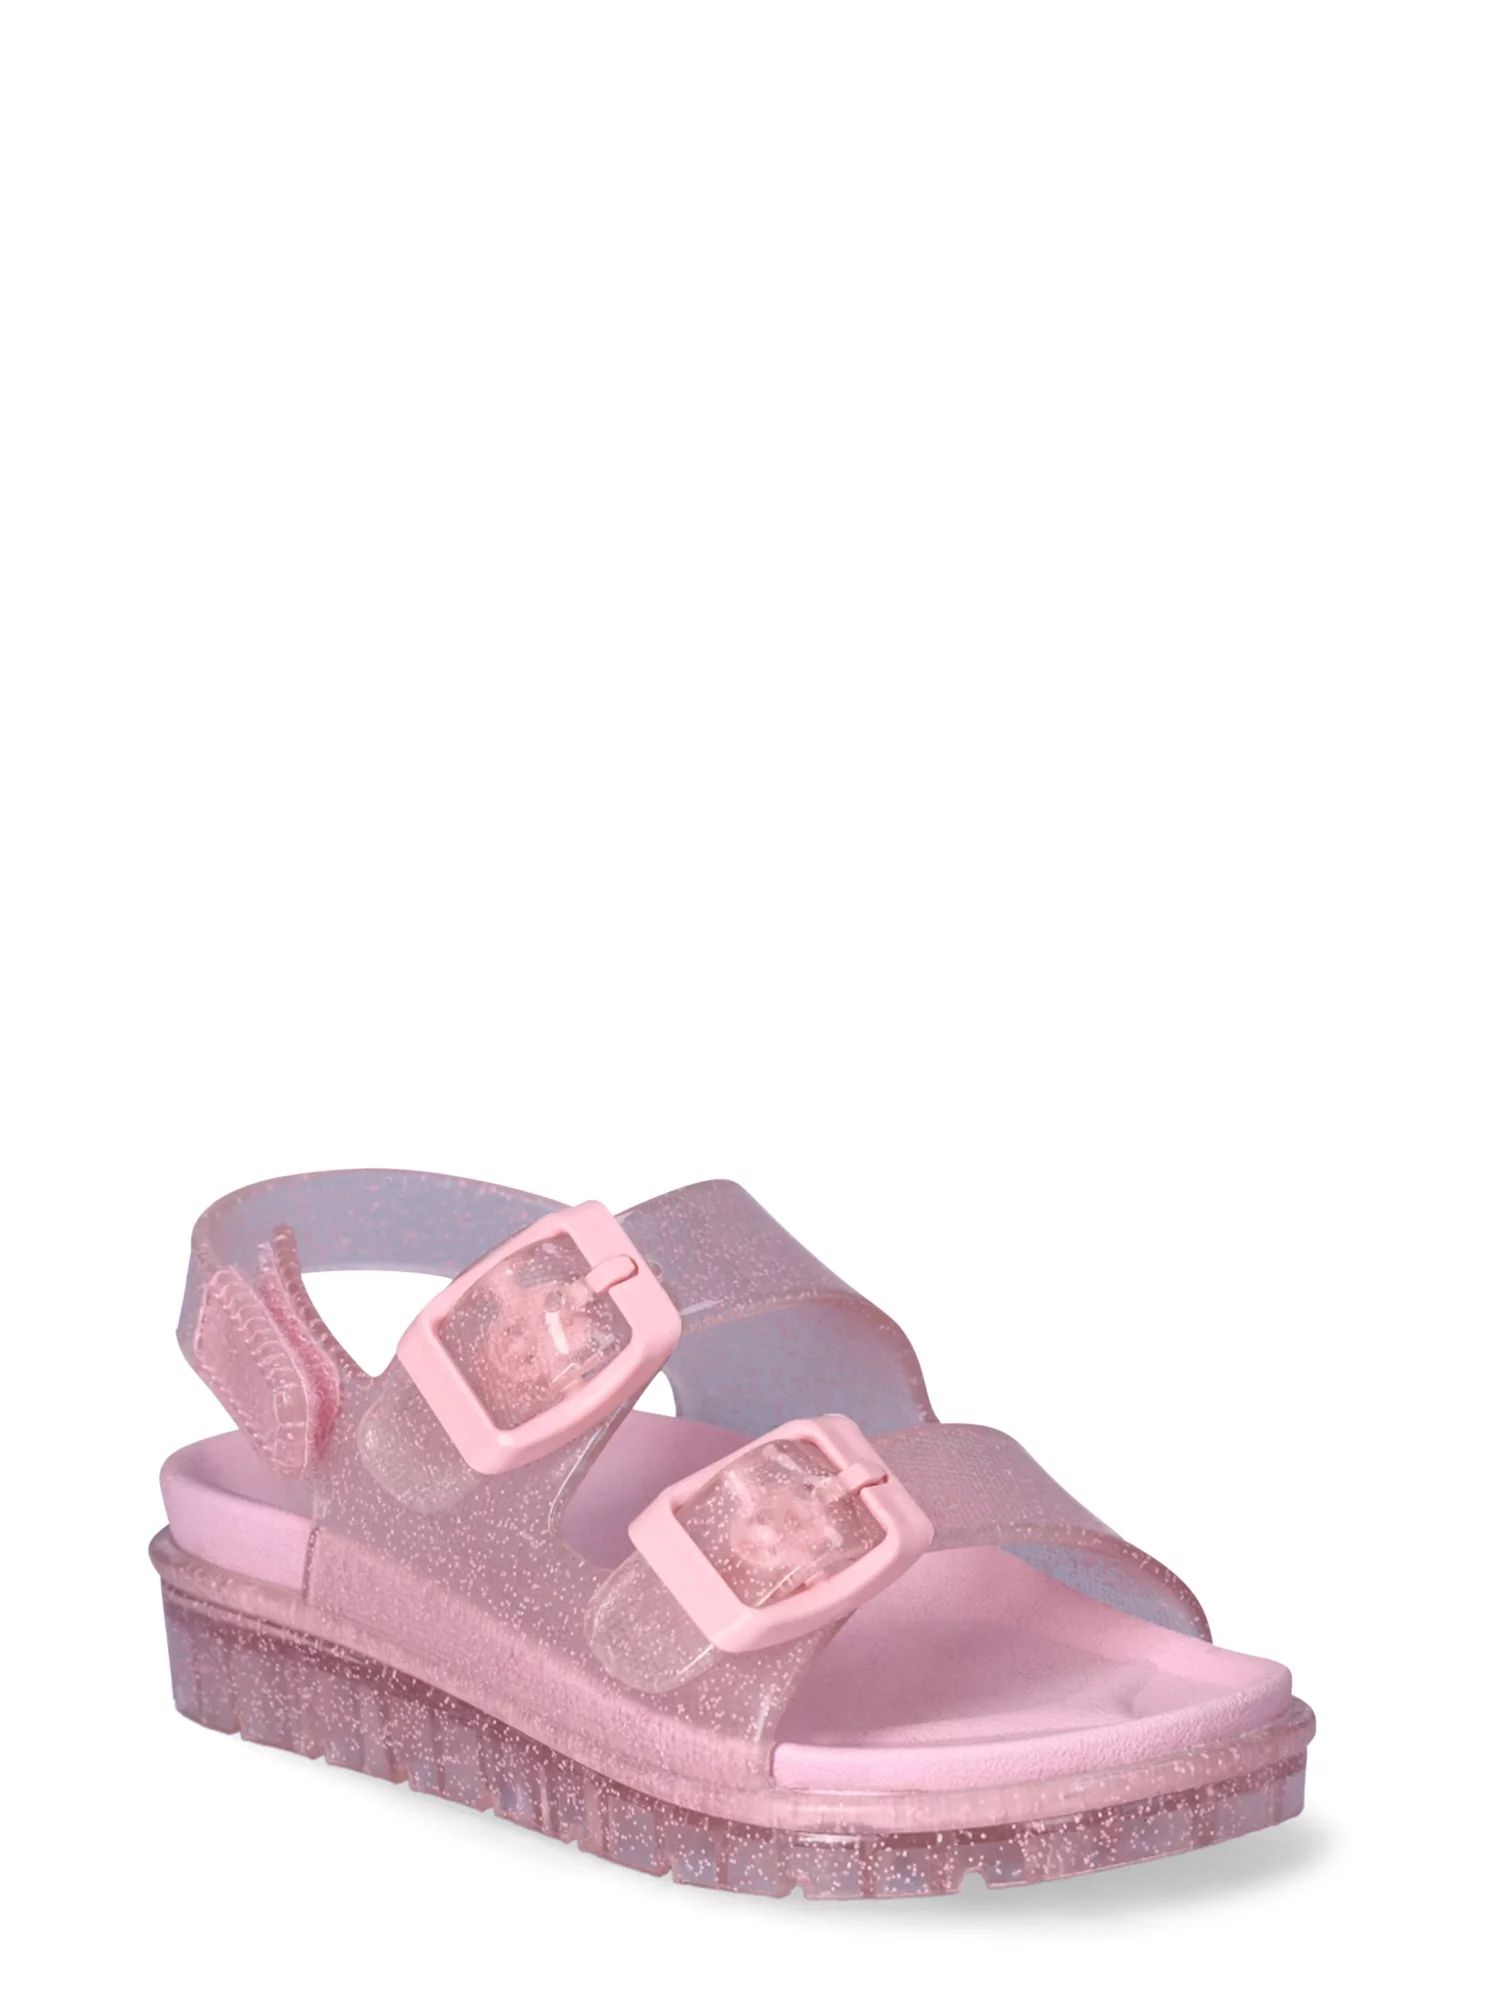 Wonder Nation Toddler Girls Two Buckle Jelly Sandals, Sizes 7-12 | Walmart (US)